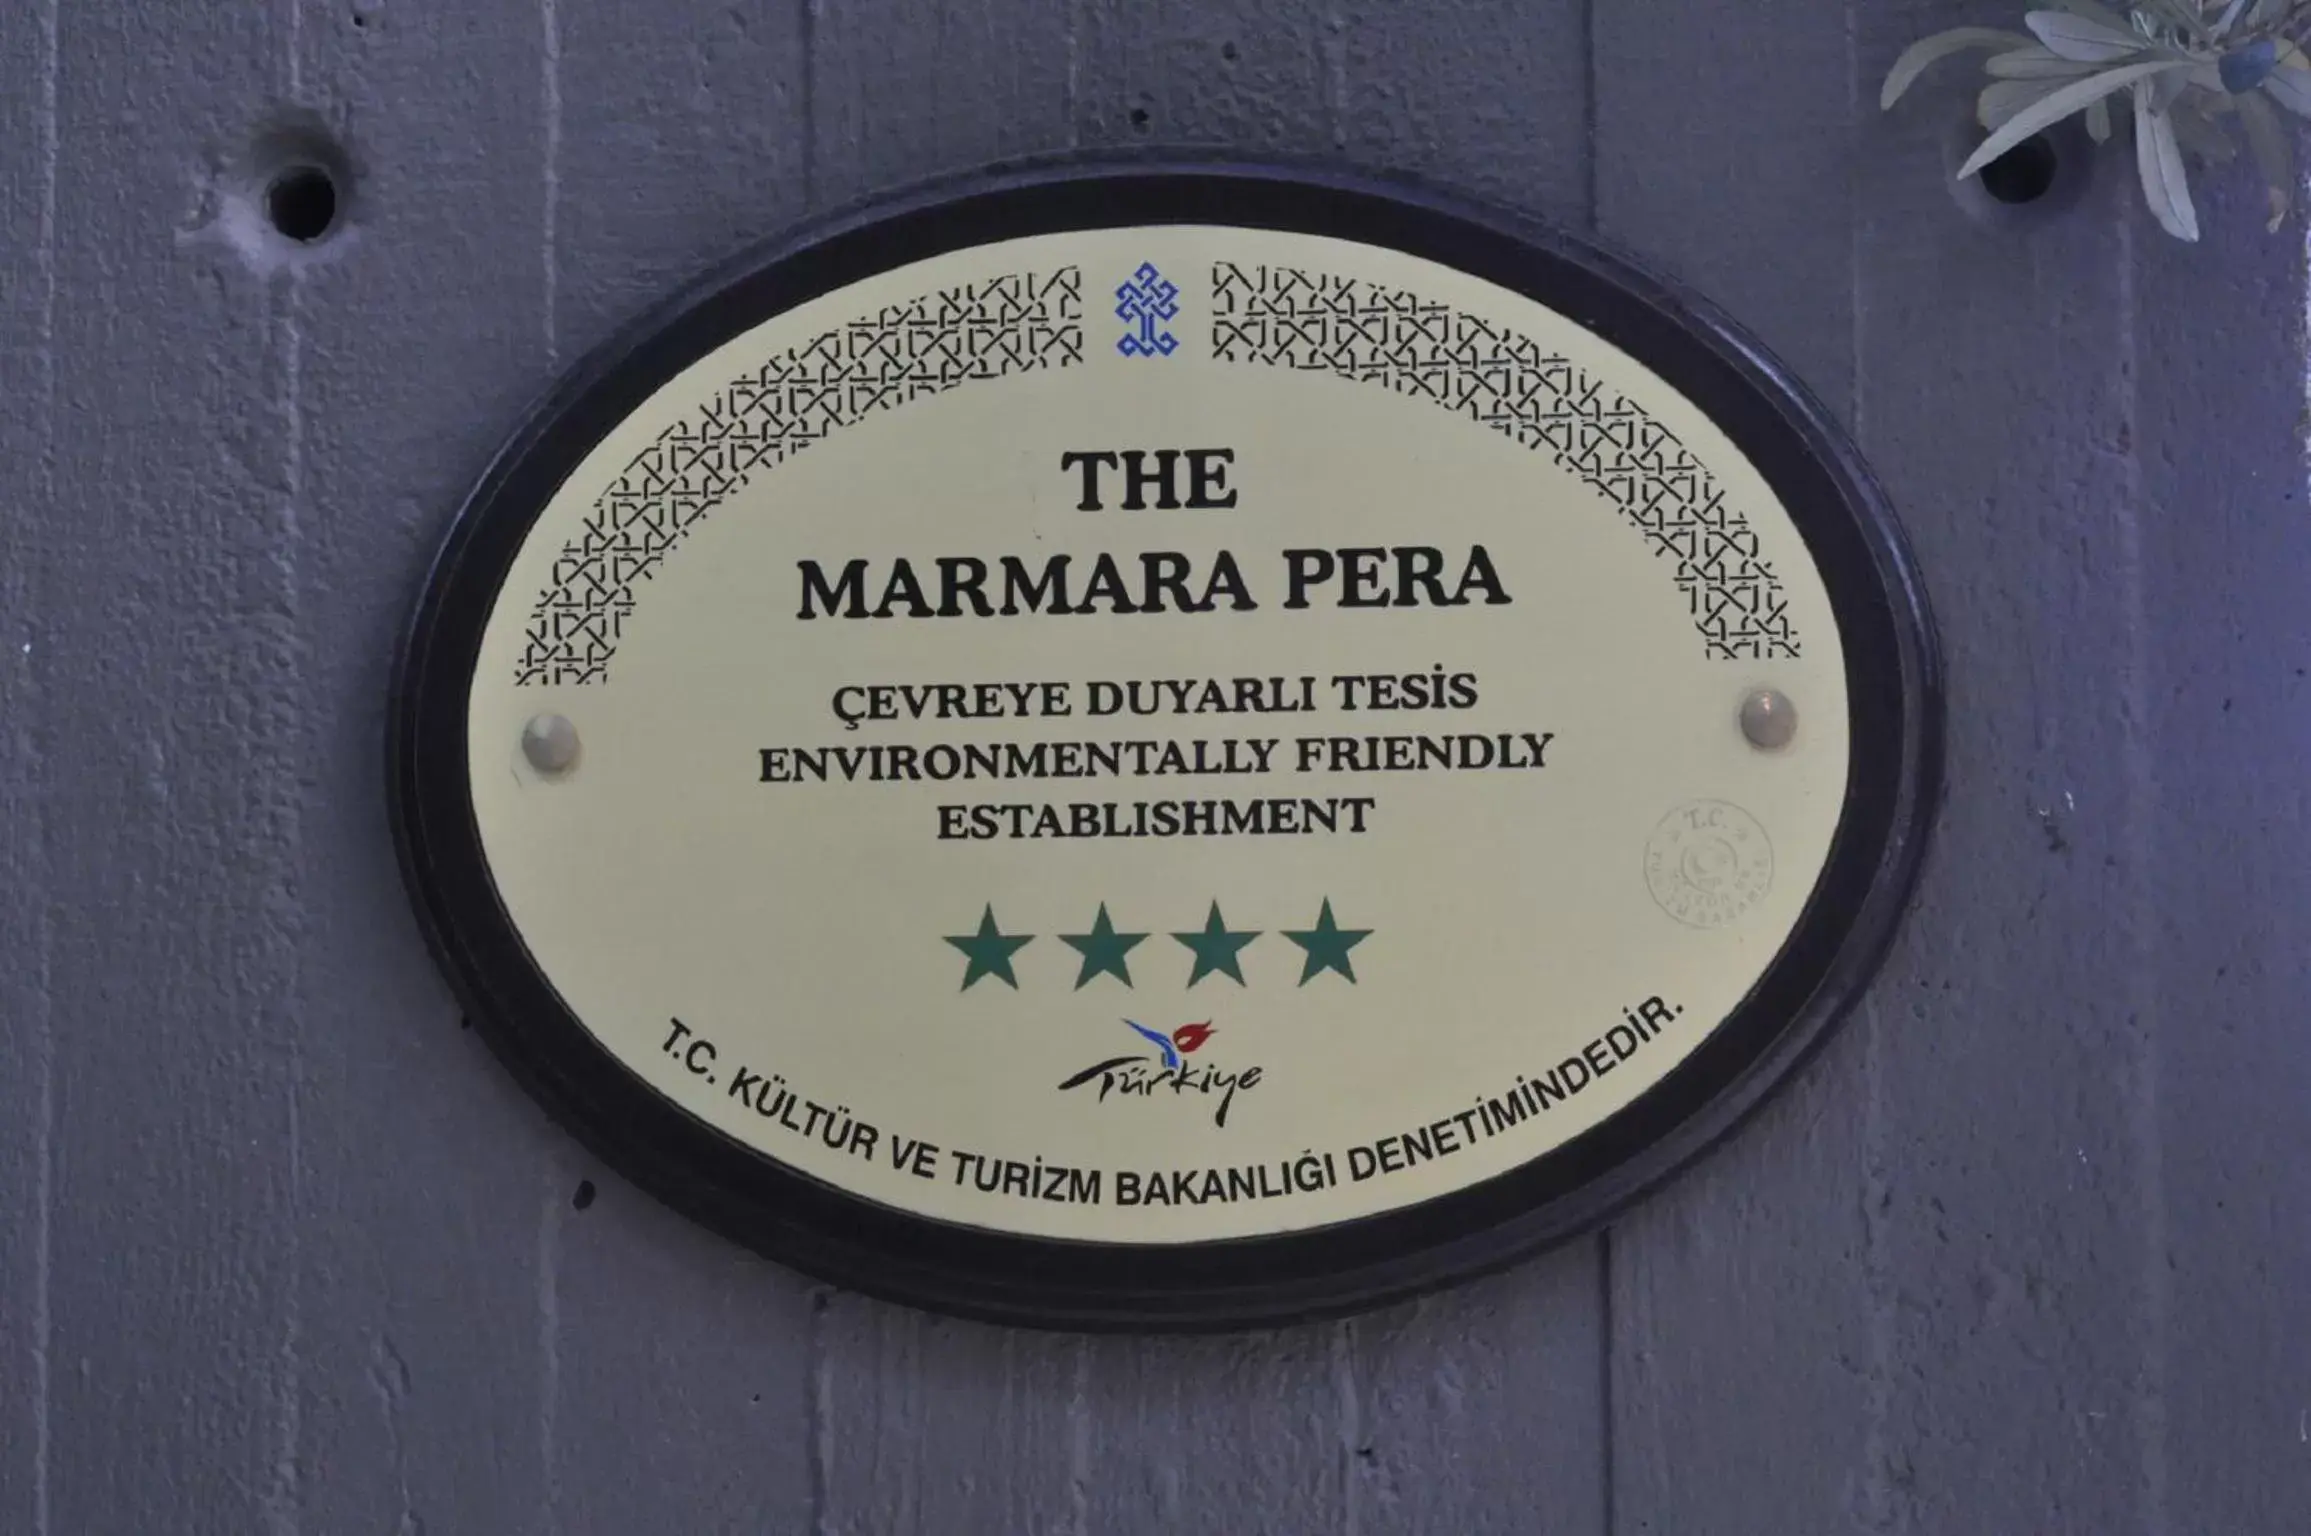 Property logo or sign in The Marmara Pera